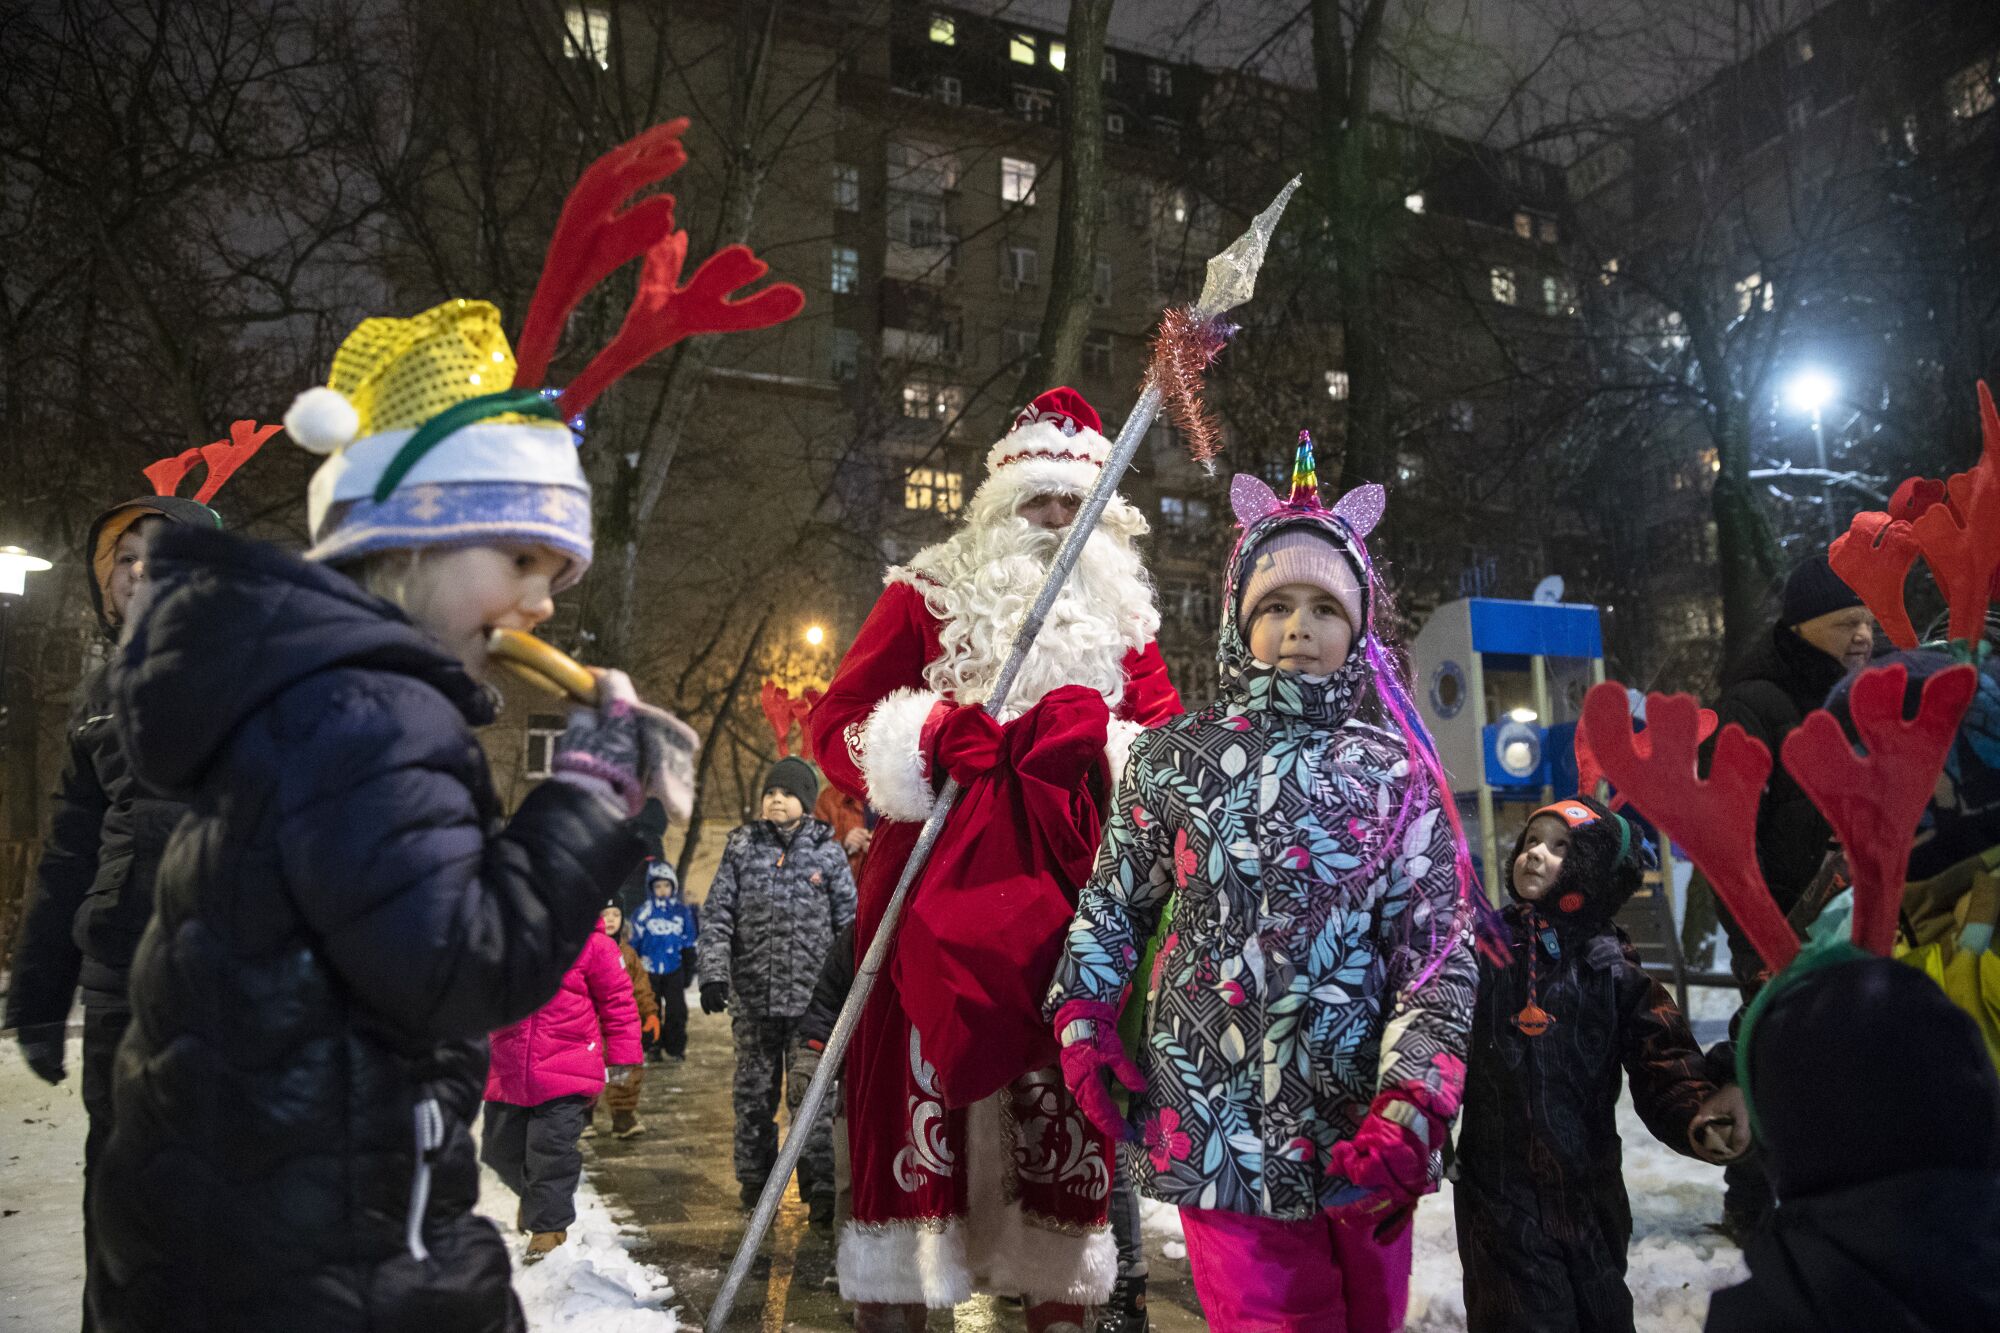 A boy eats a soft pretzel and a girl wears a unicorn headband near a man dressed as Santa Claus.